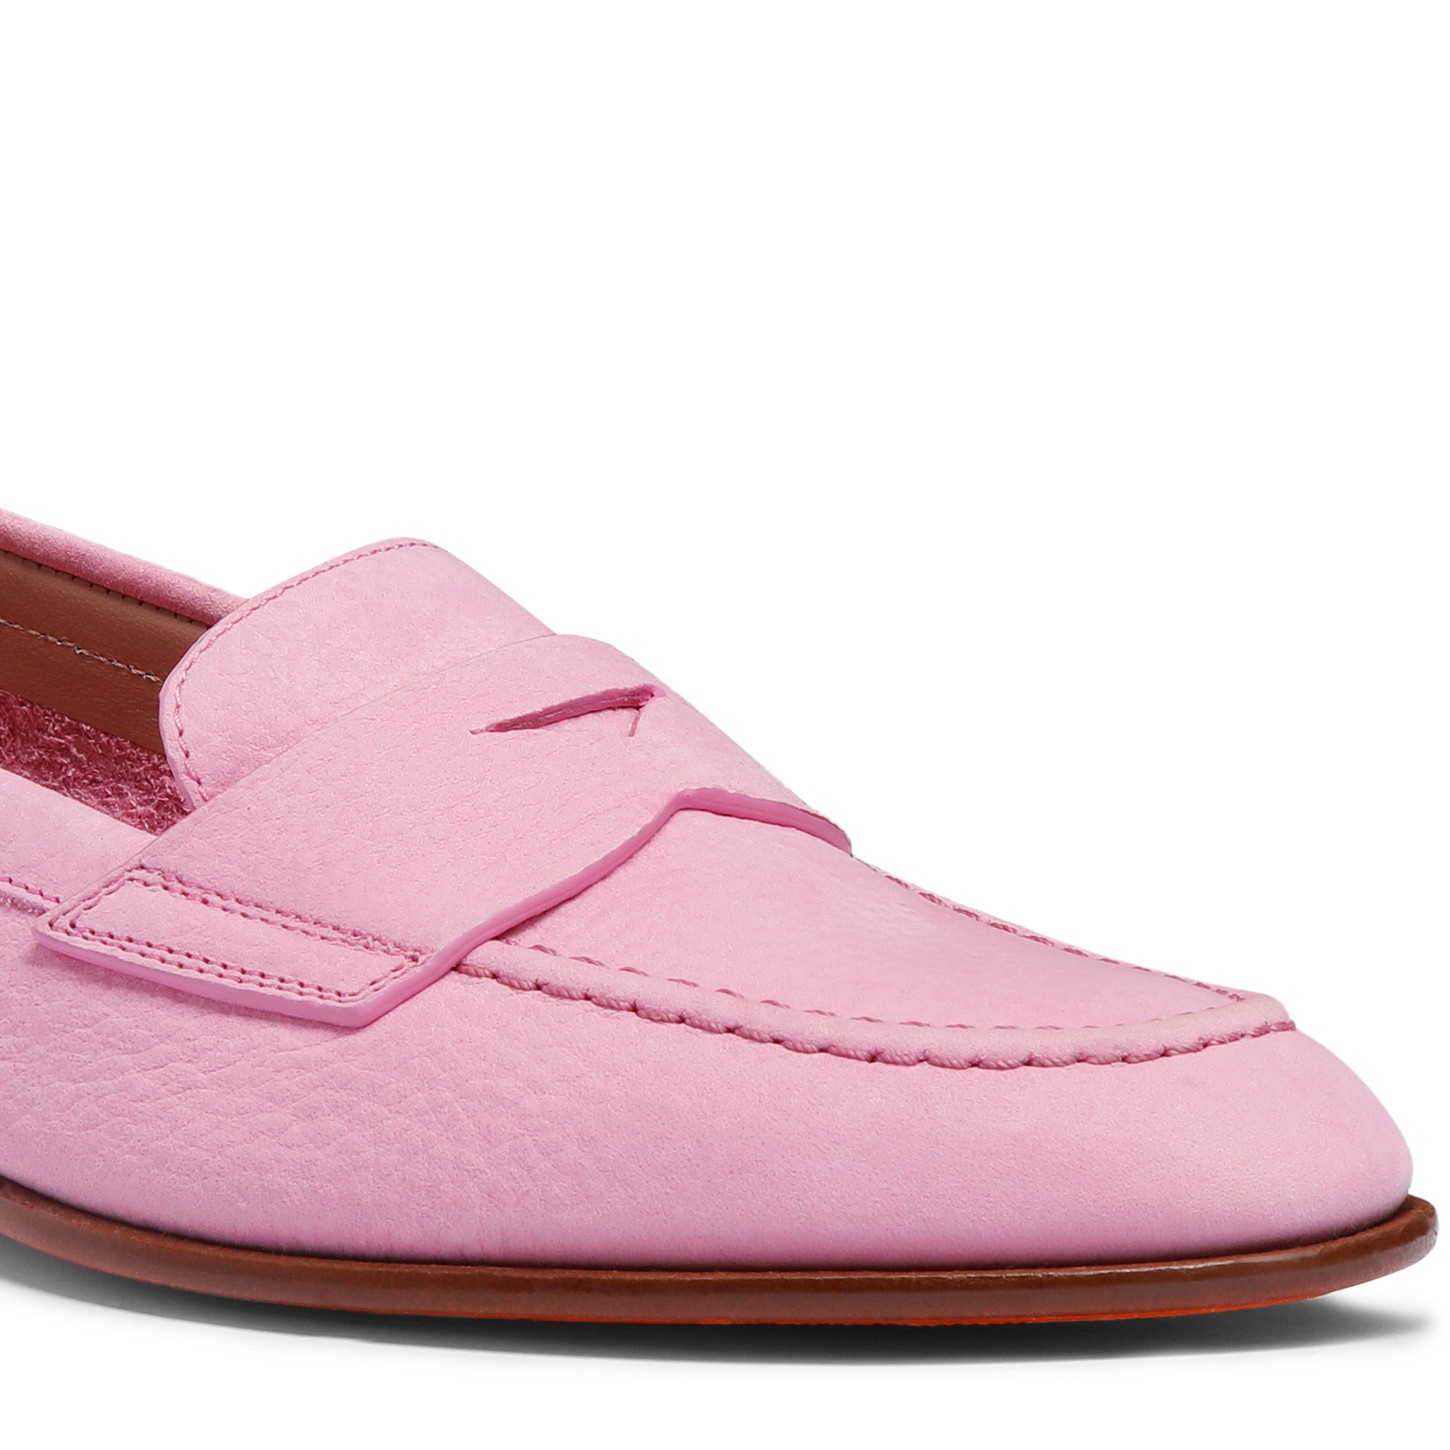 Women’s pink nubuck penny loafer - 6